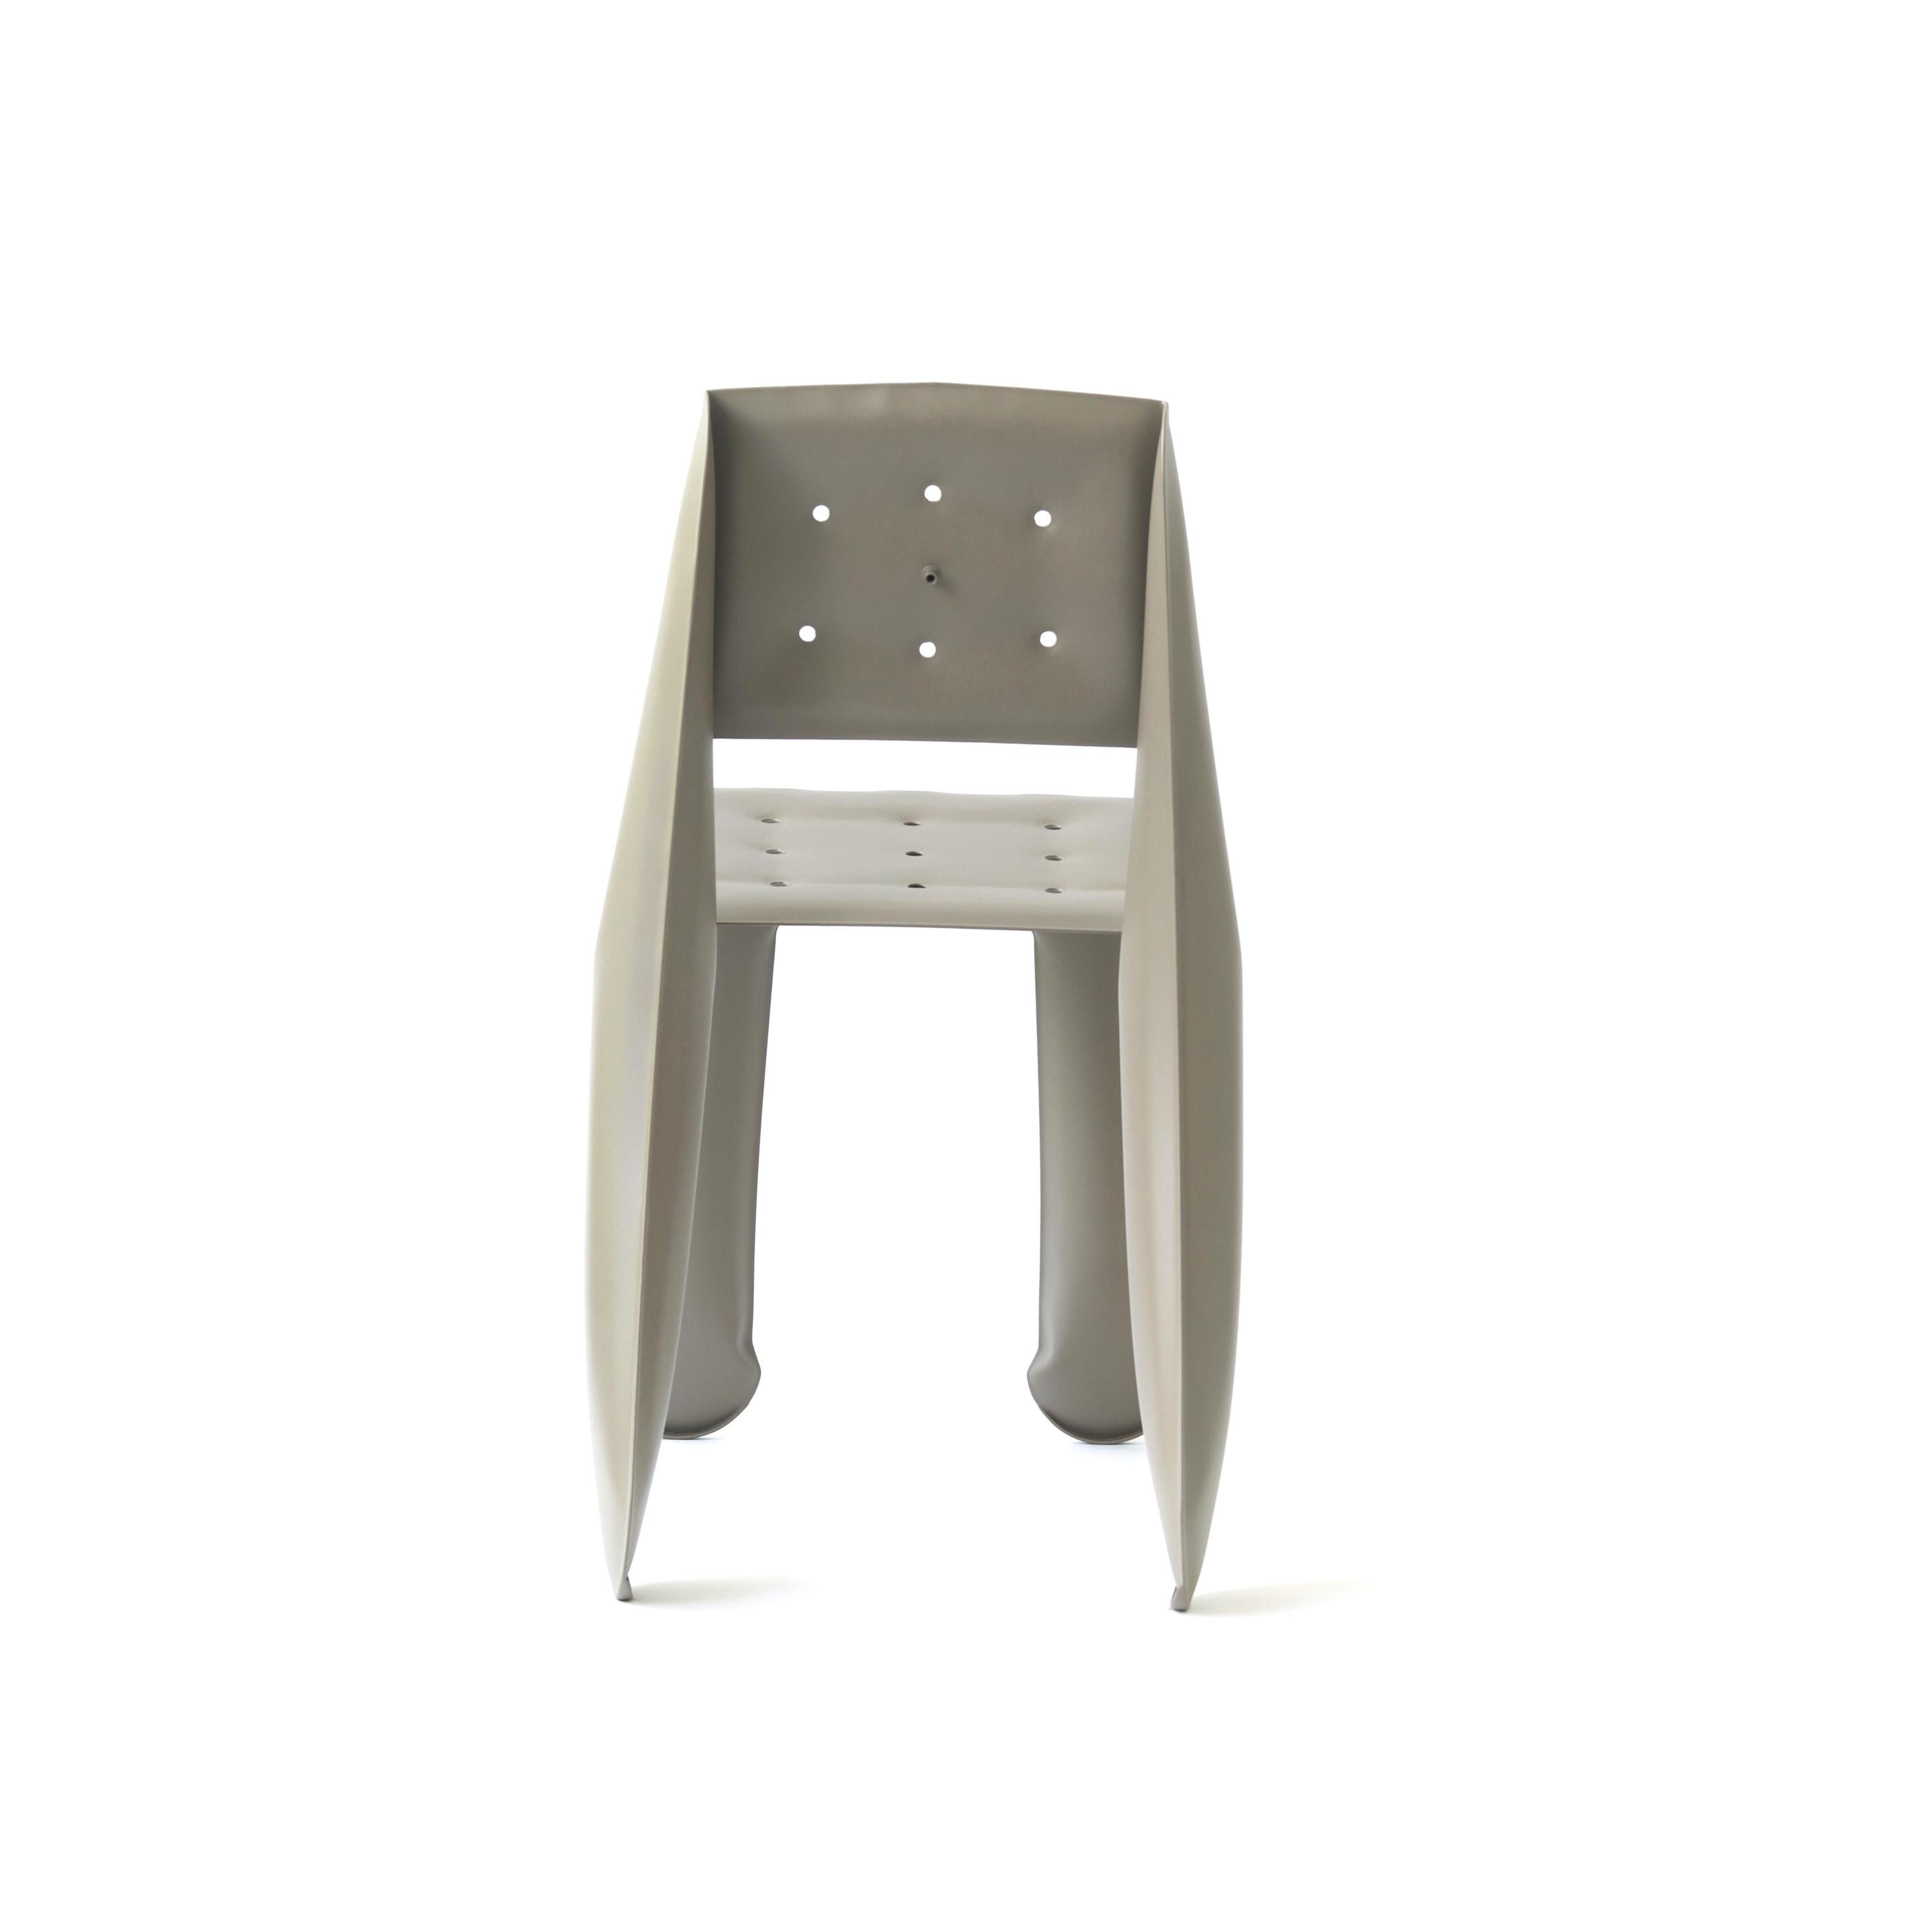 Powder-Coated Beige Aluminum Chippensteel 0.5 Sculptural Chair by Zieta For Sale